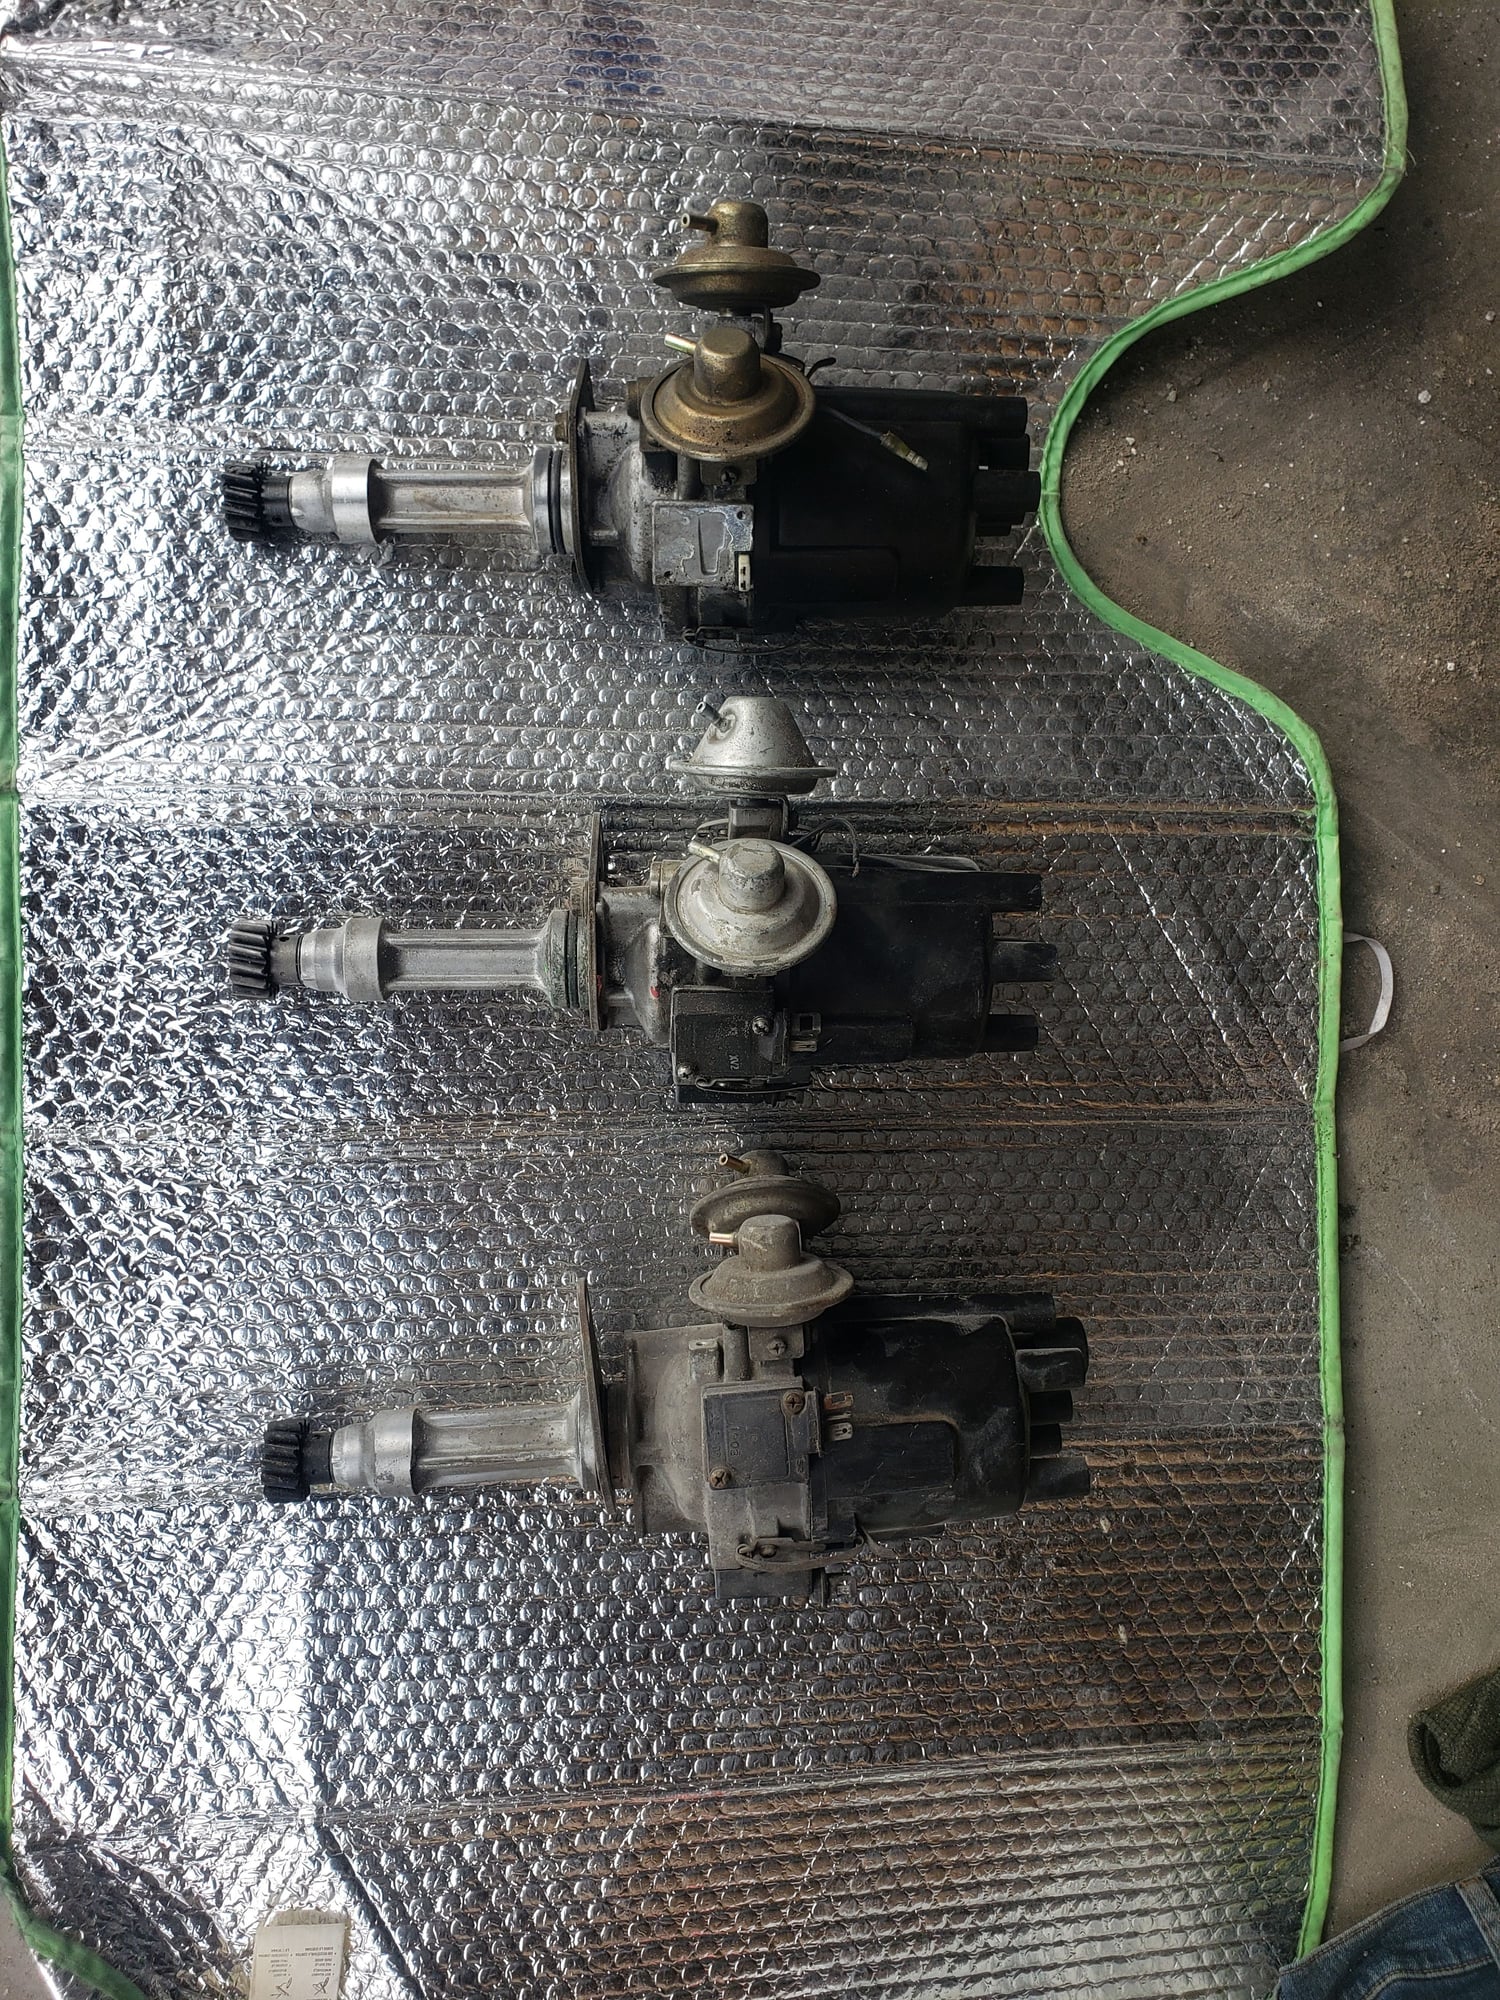 Engine - Electrical - Distributor's - Used - 1979 to 1985 Mazda RX-7 - Idaho Falls, ID 83401, United States